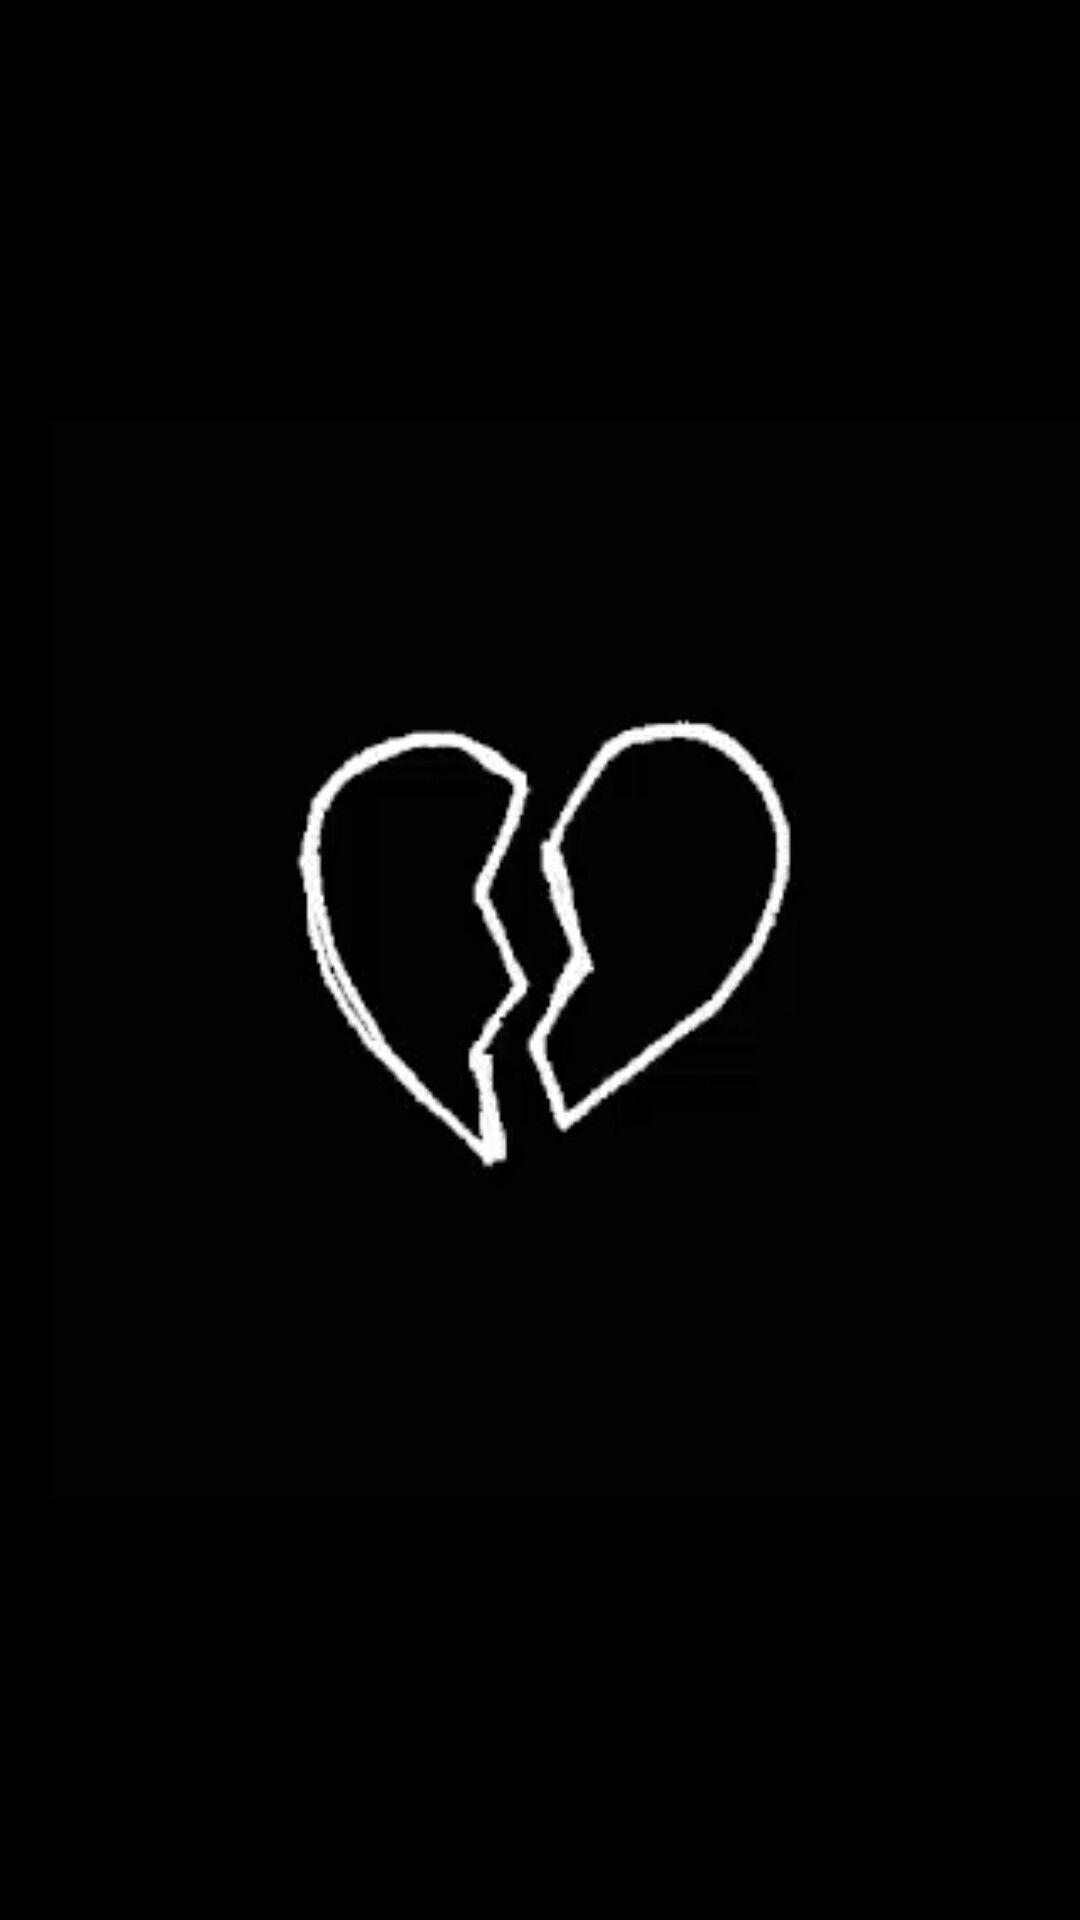 Wallpaper Emoji Broken Heart Search free heart broken